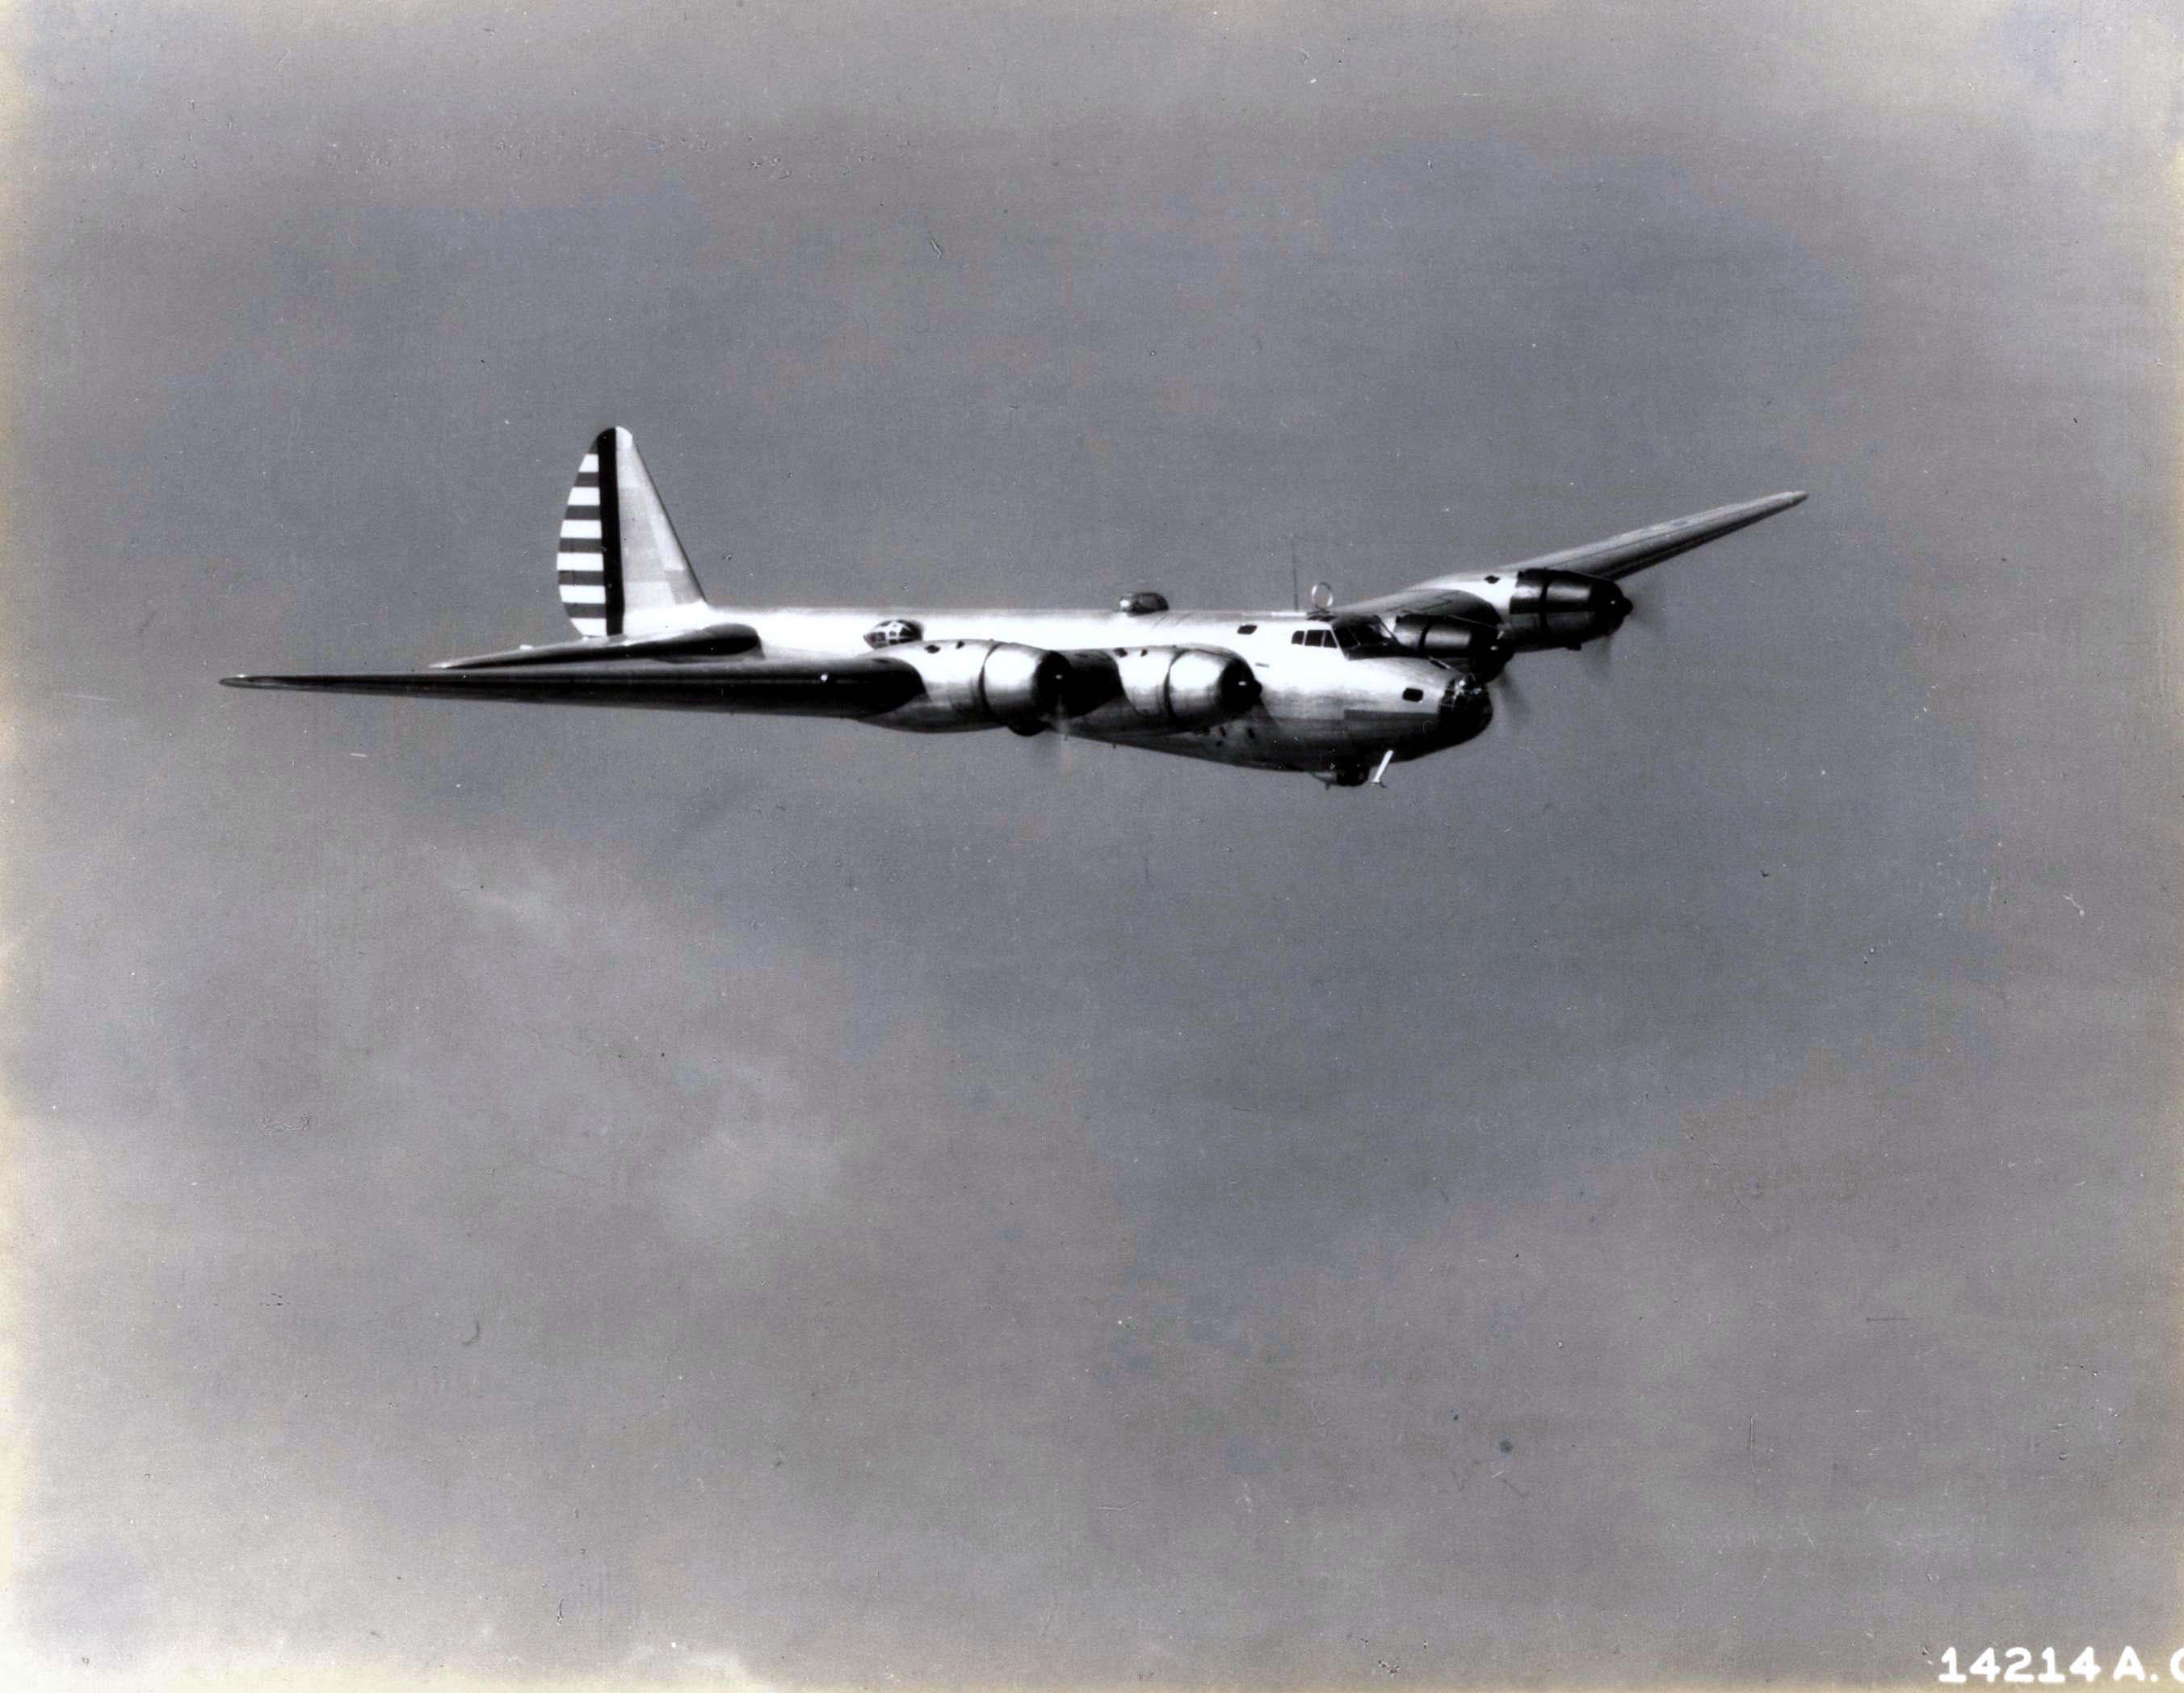 Boeing XB-15 35-277, a prototype long-range heavy bomber. (U.S. Air Force)